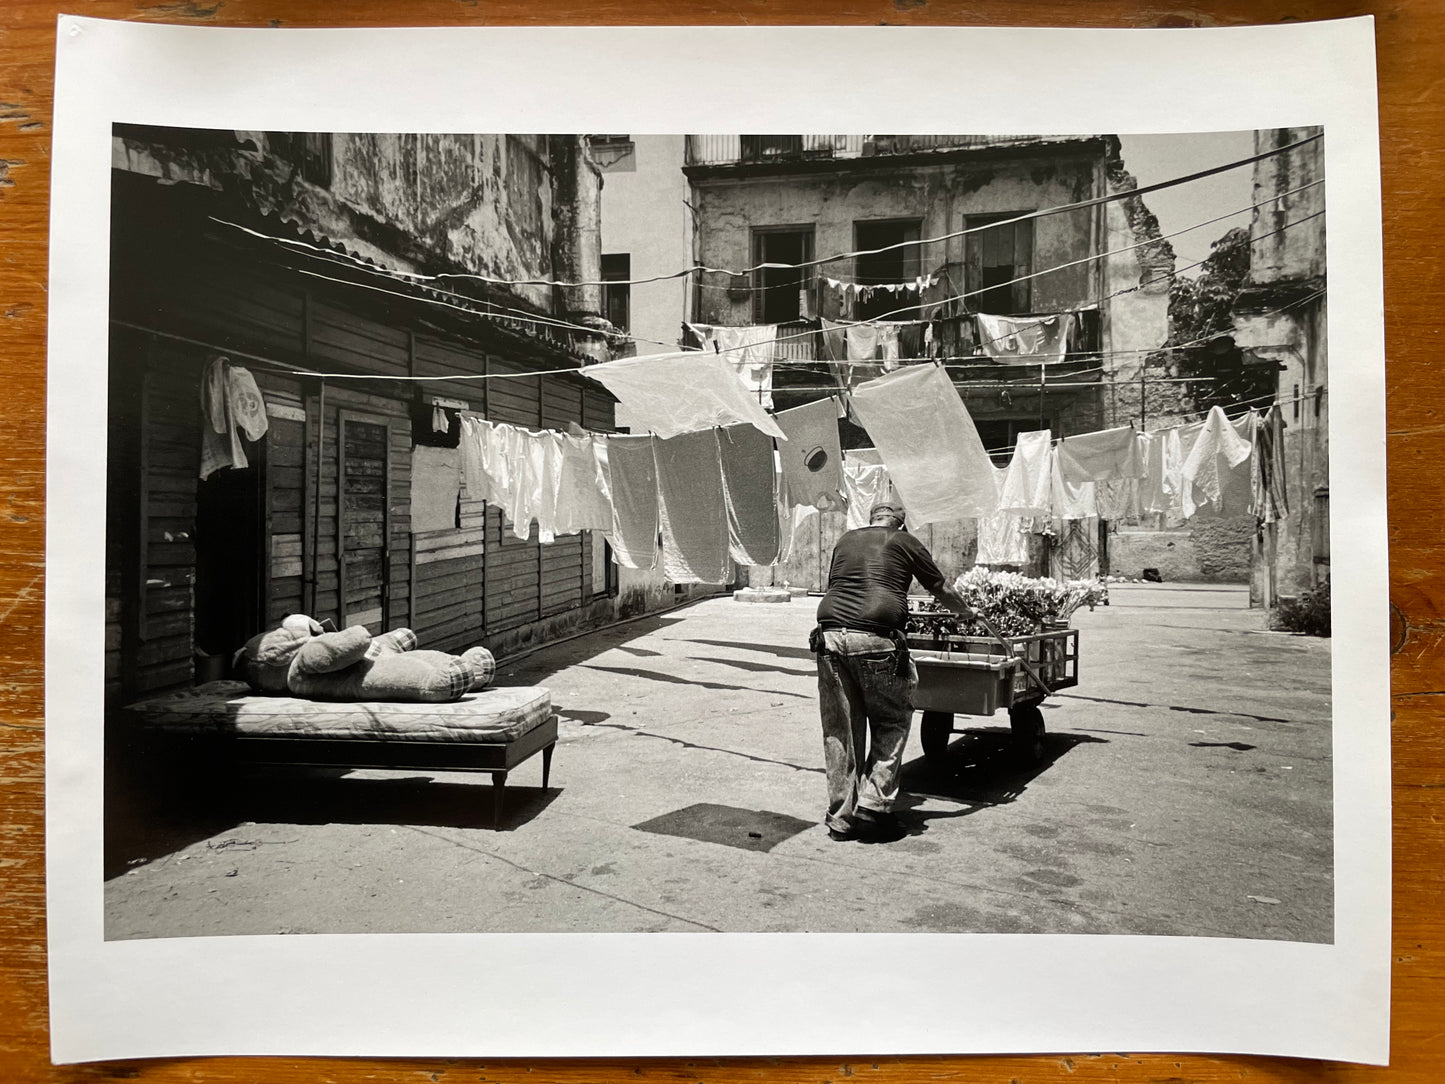 Susan S. Bank (American, 20th c.) Cuba Photograph Print Piercing through the darkness 11x14 Flowercart